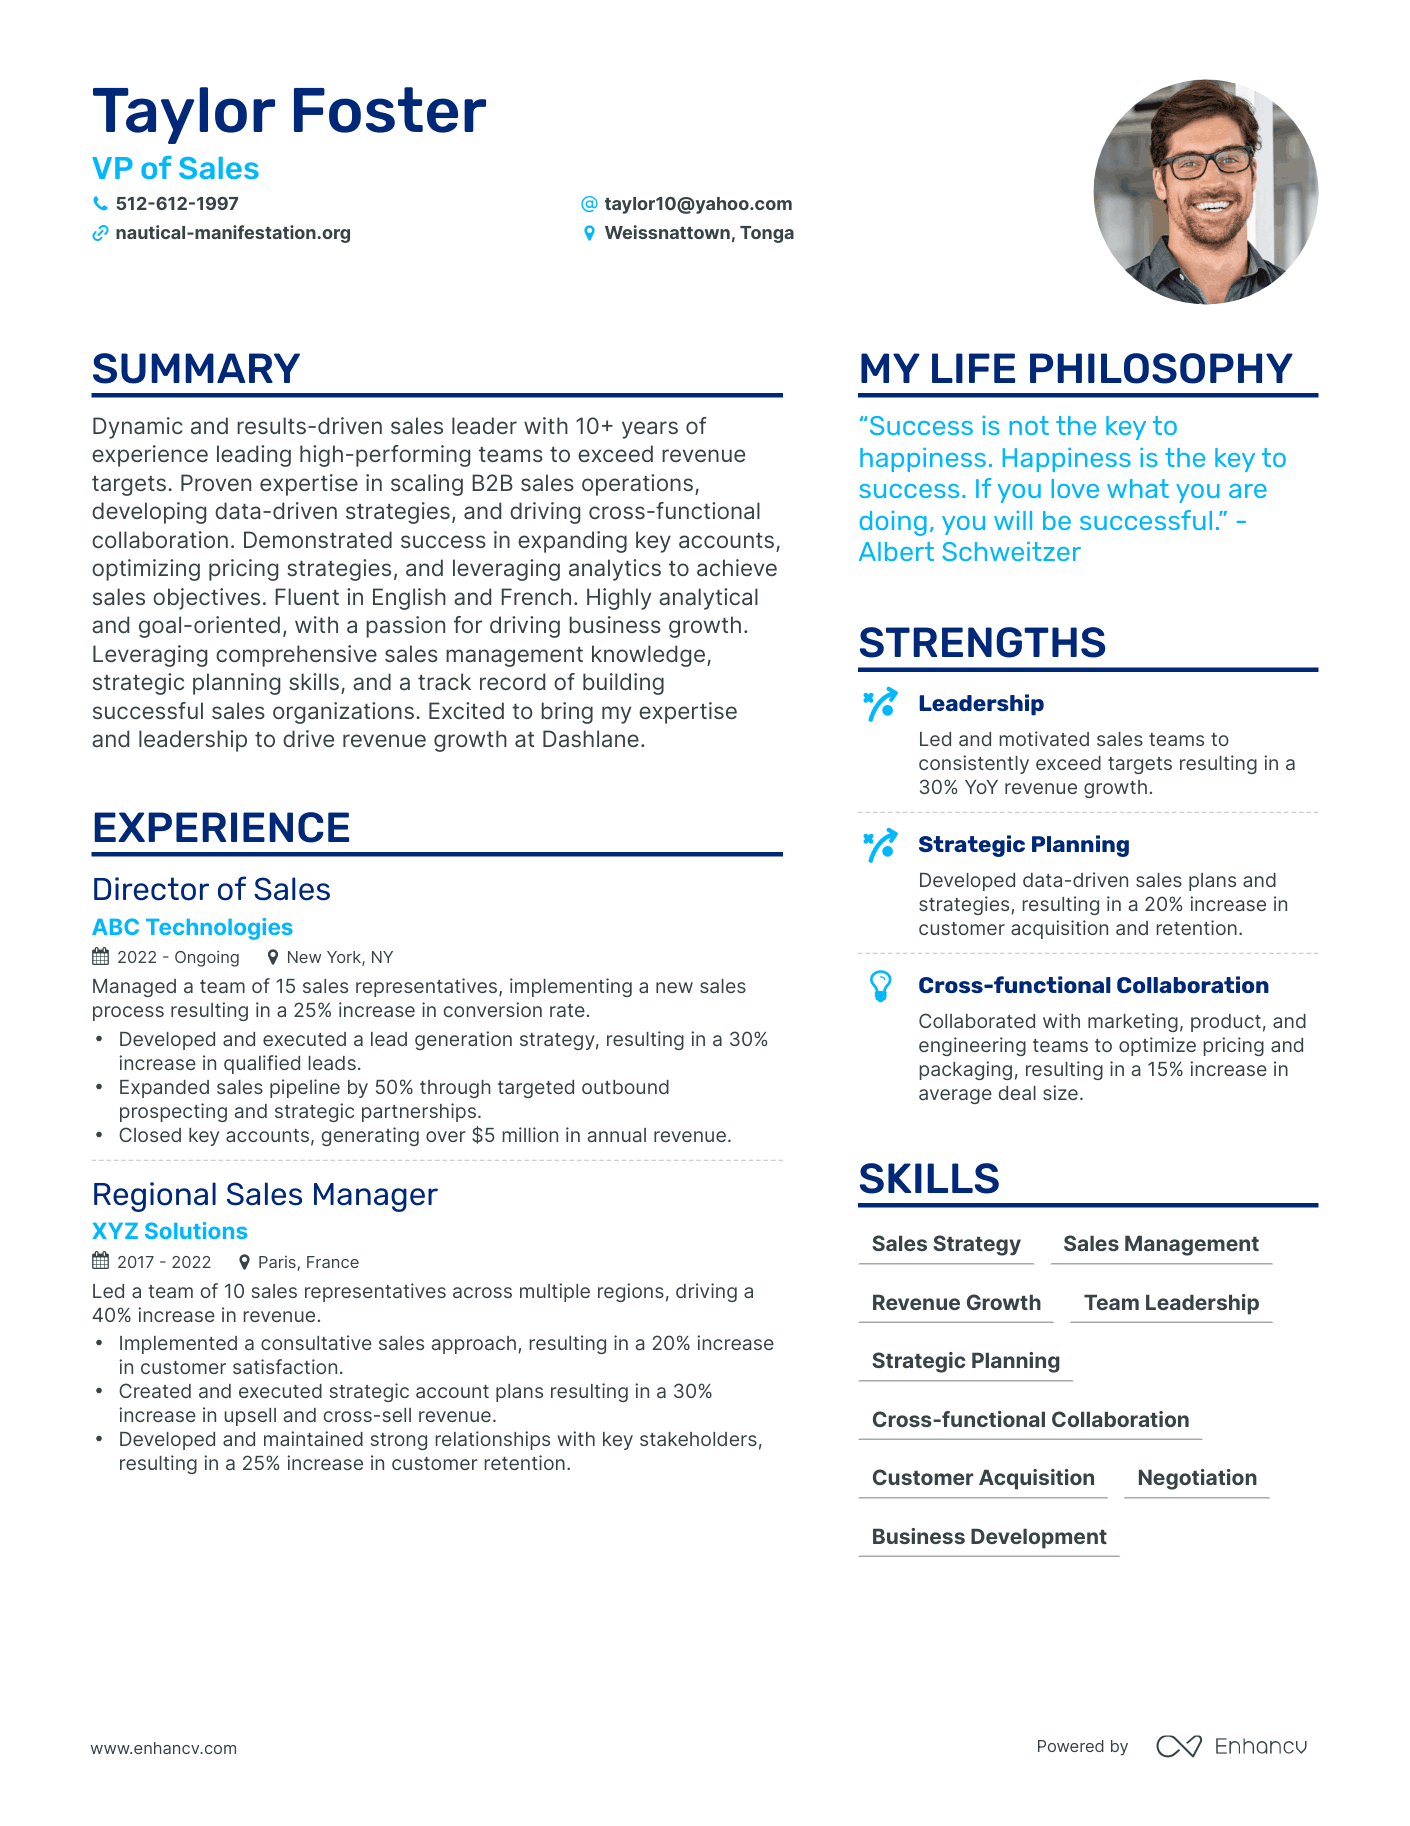 VP of Sales resume example